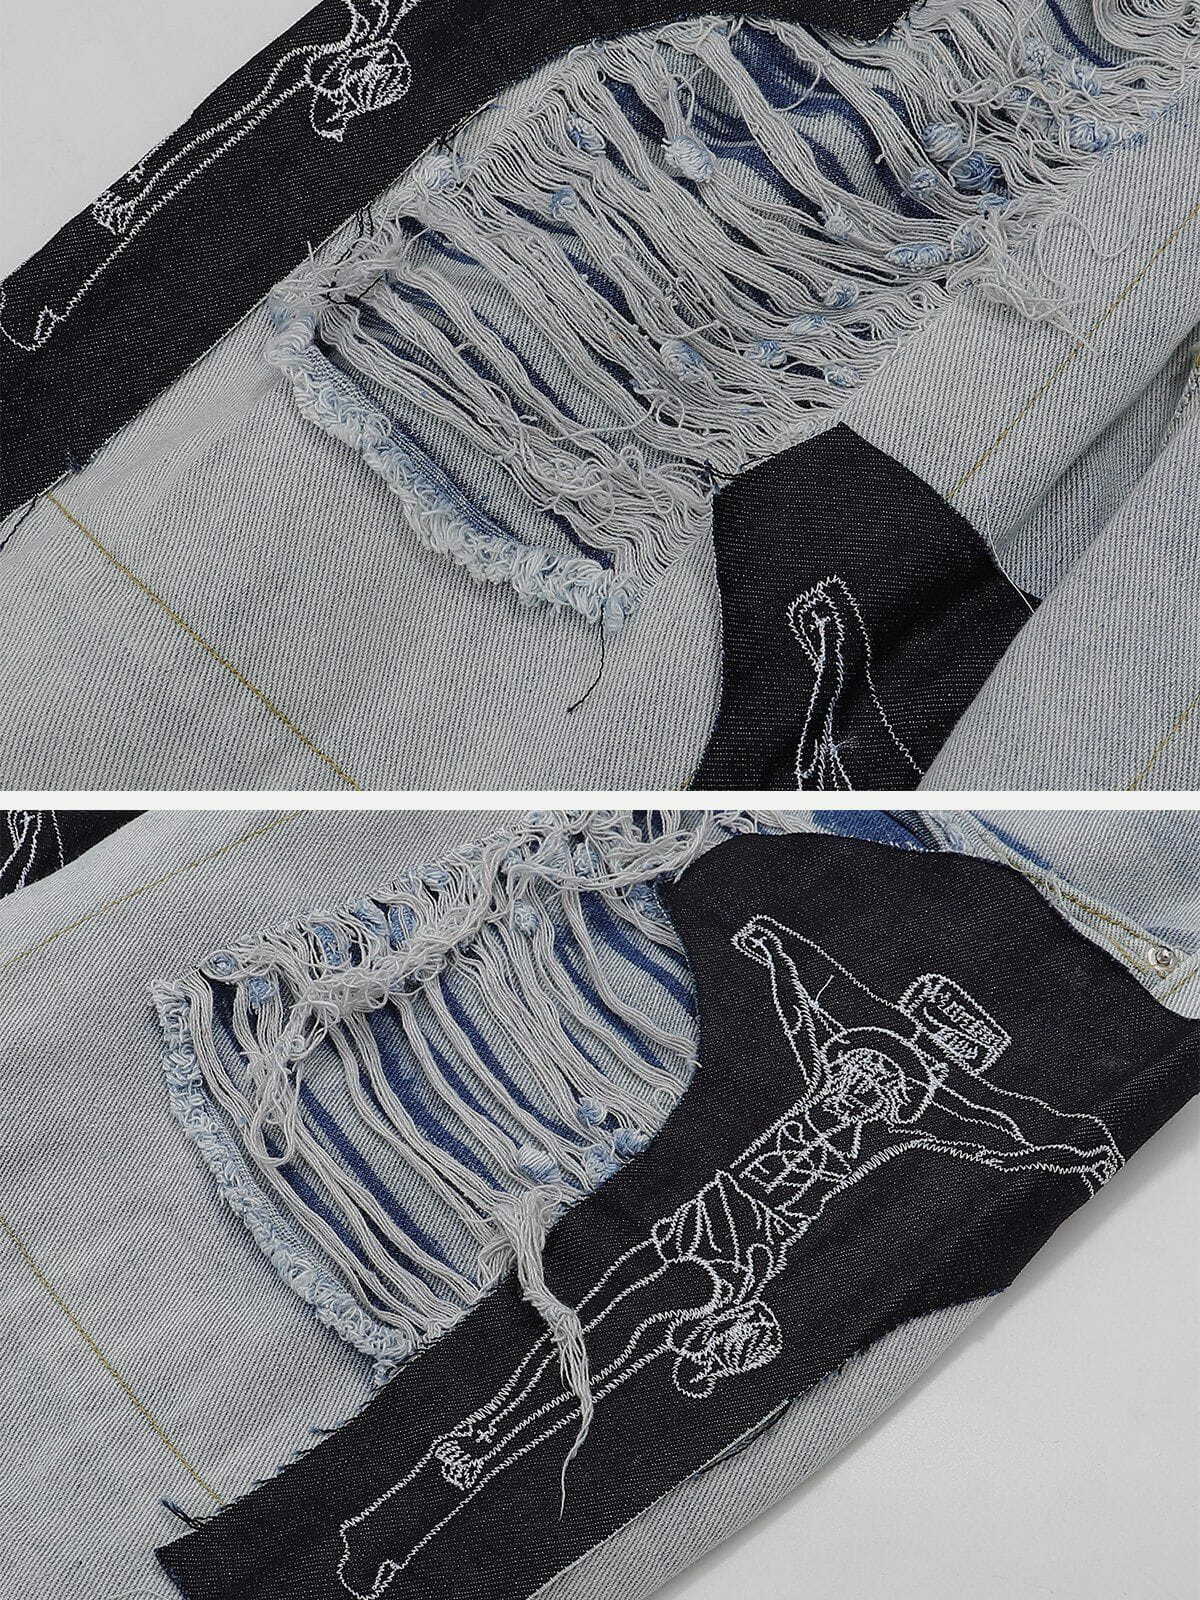 revolutionary patchwork jeans edgy & distinctive streetwear 7044